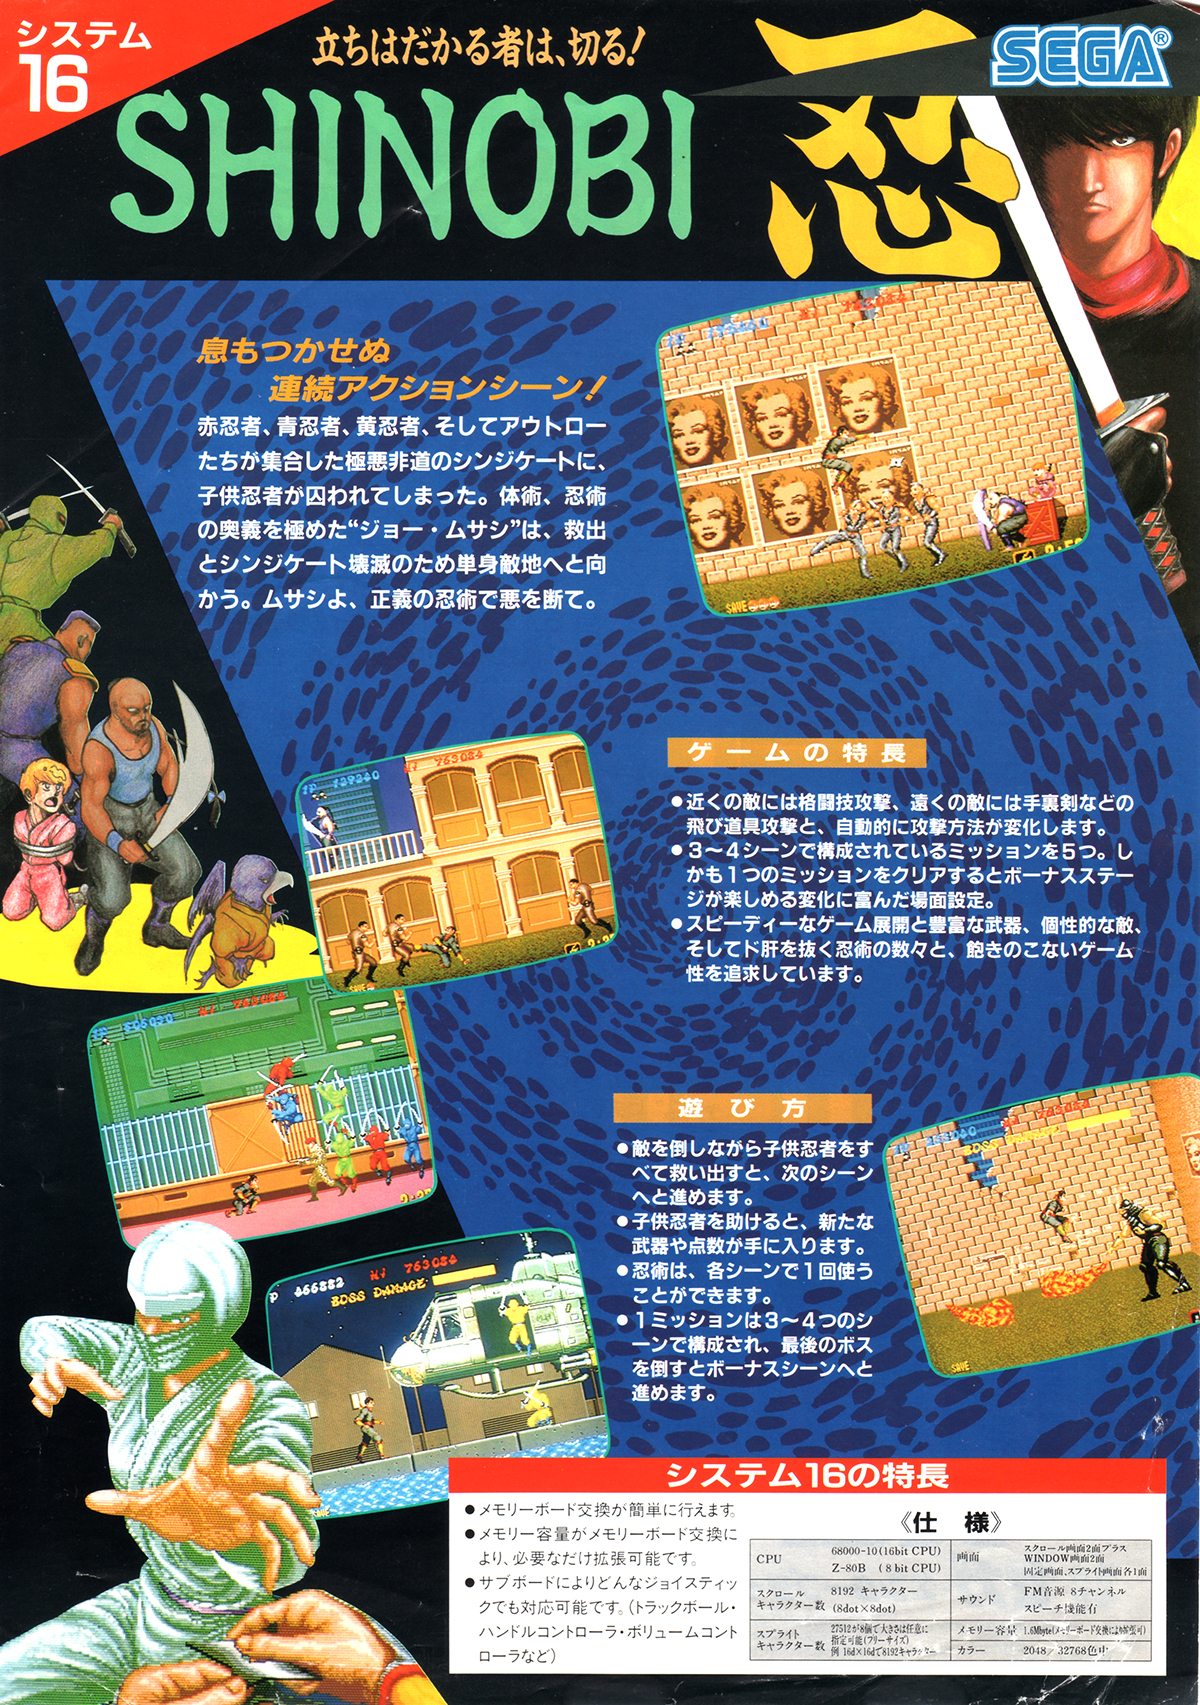 Shinobi Arcade JP Flyer.jpg